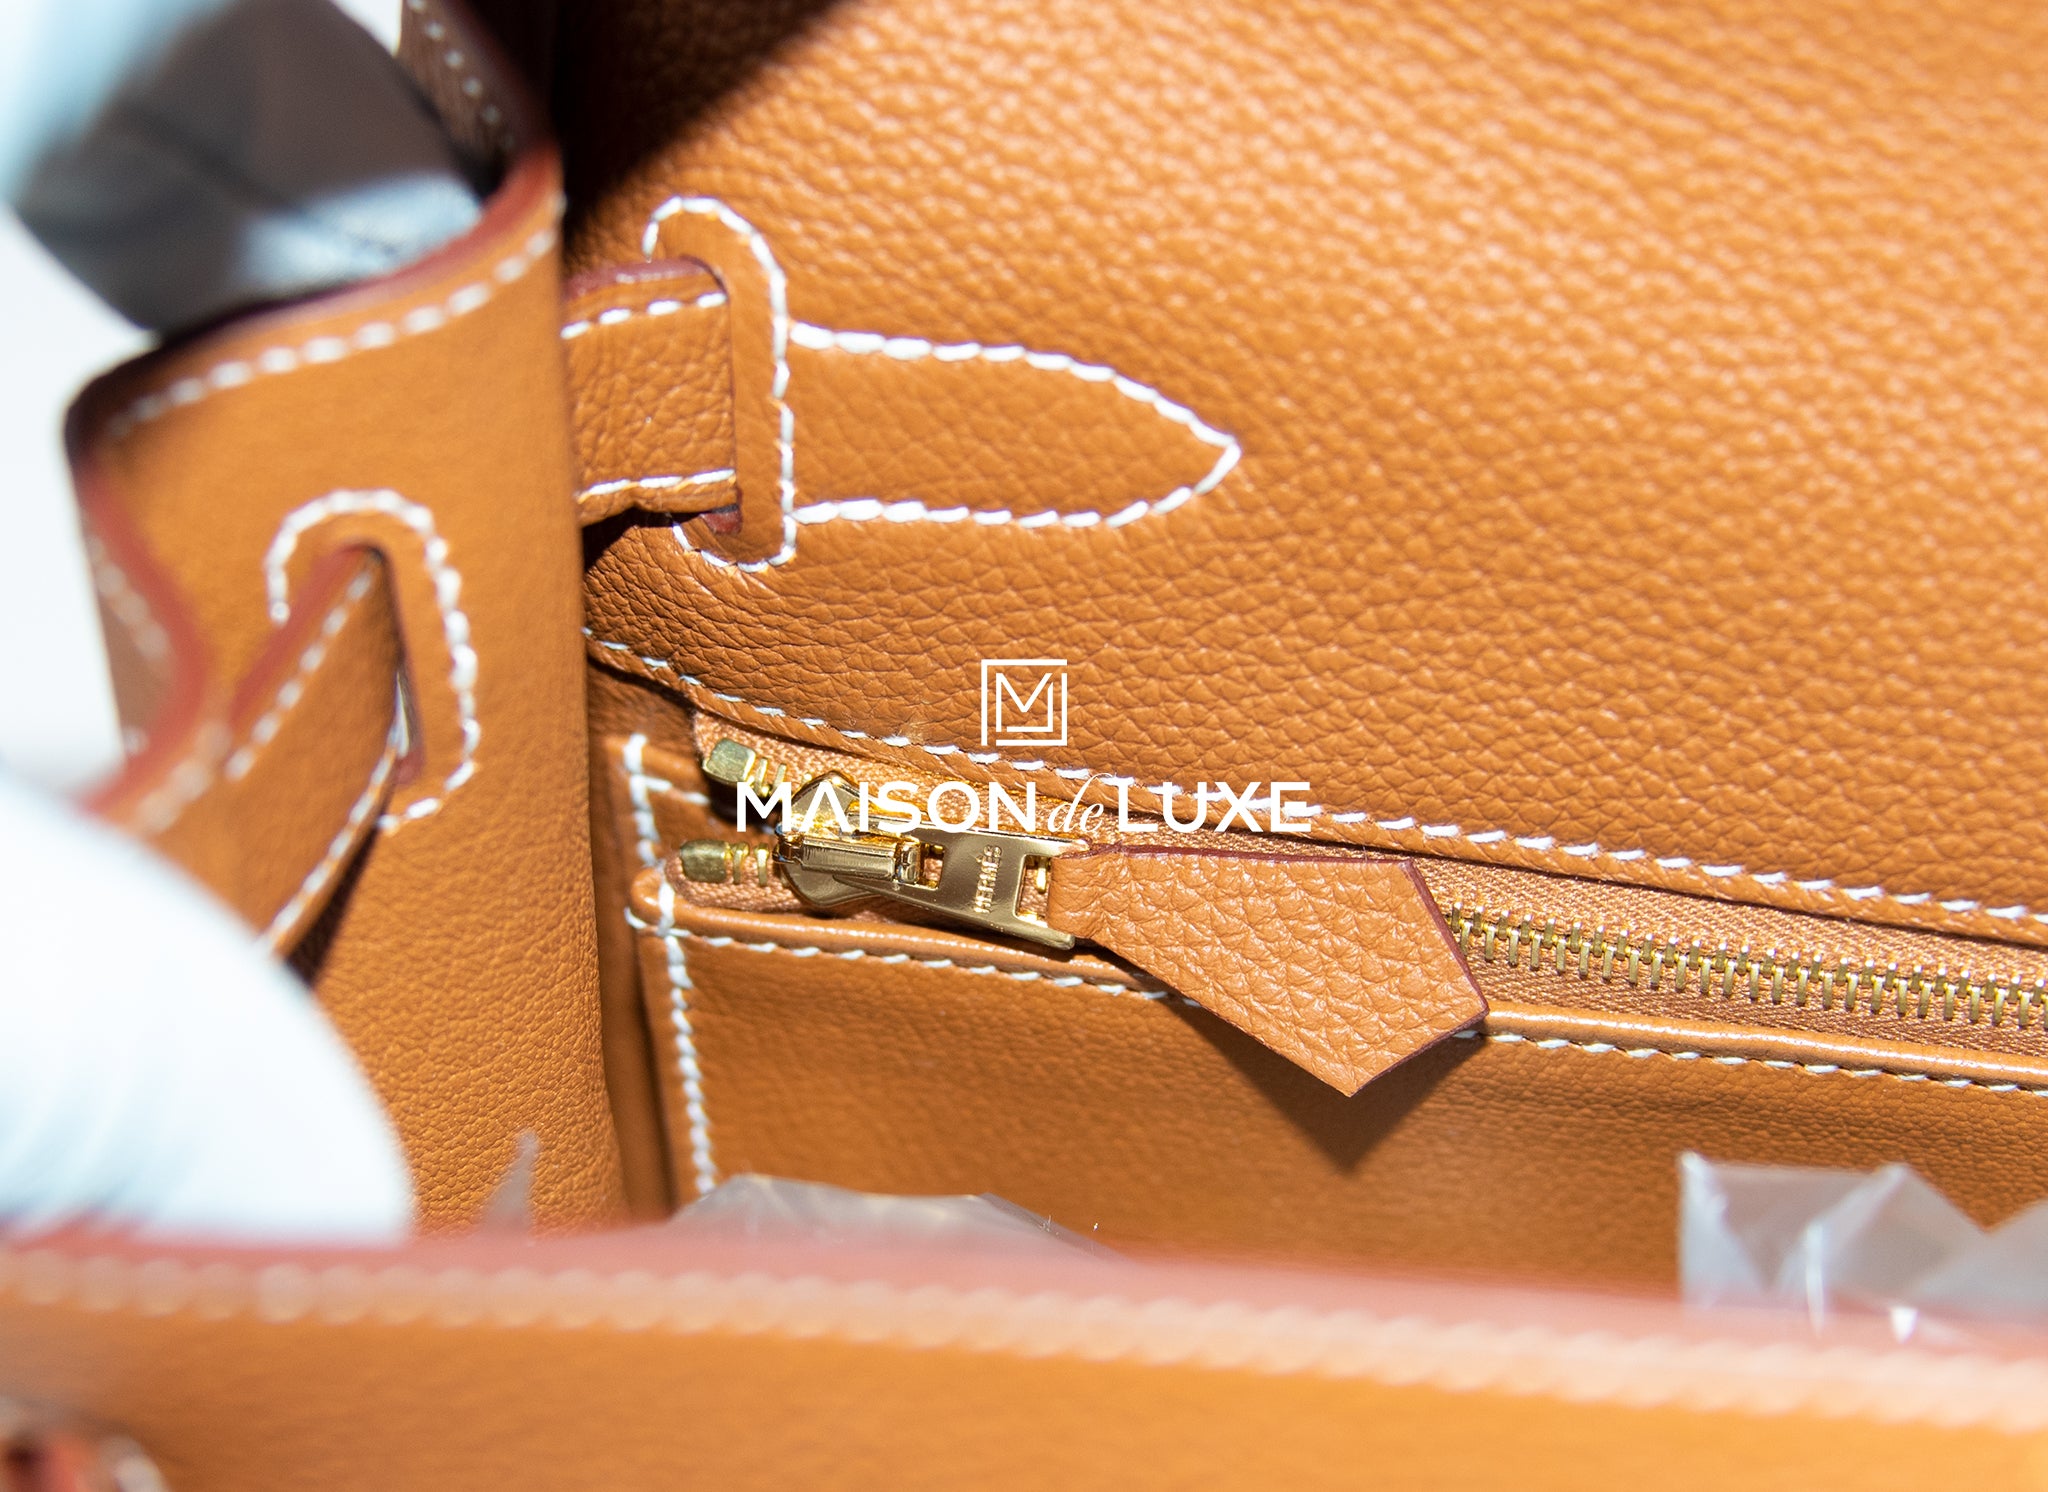 Hermes Kelly 28 Returnee Handbag Vert Amande Togo Leather With Gold Ha –  Bags Of Personality